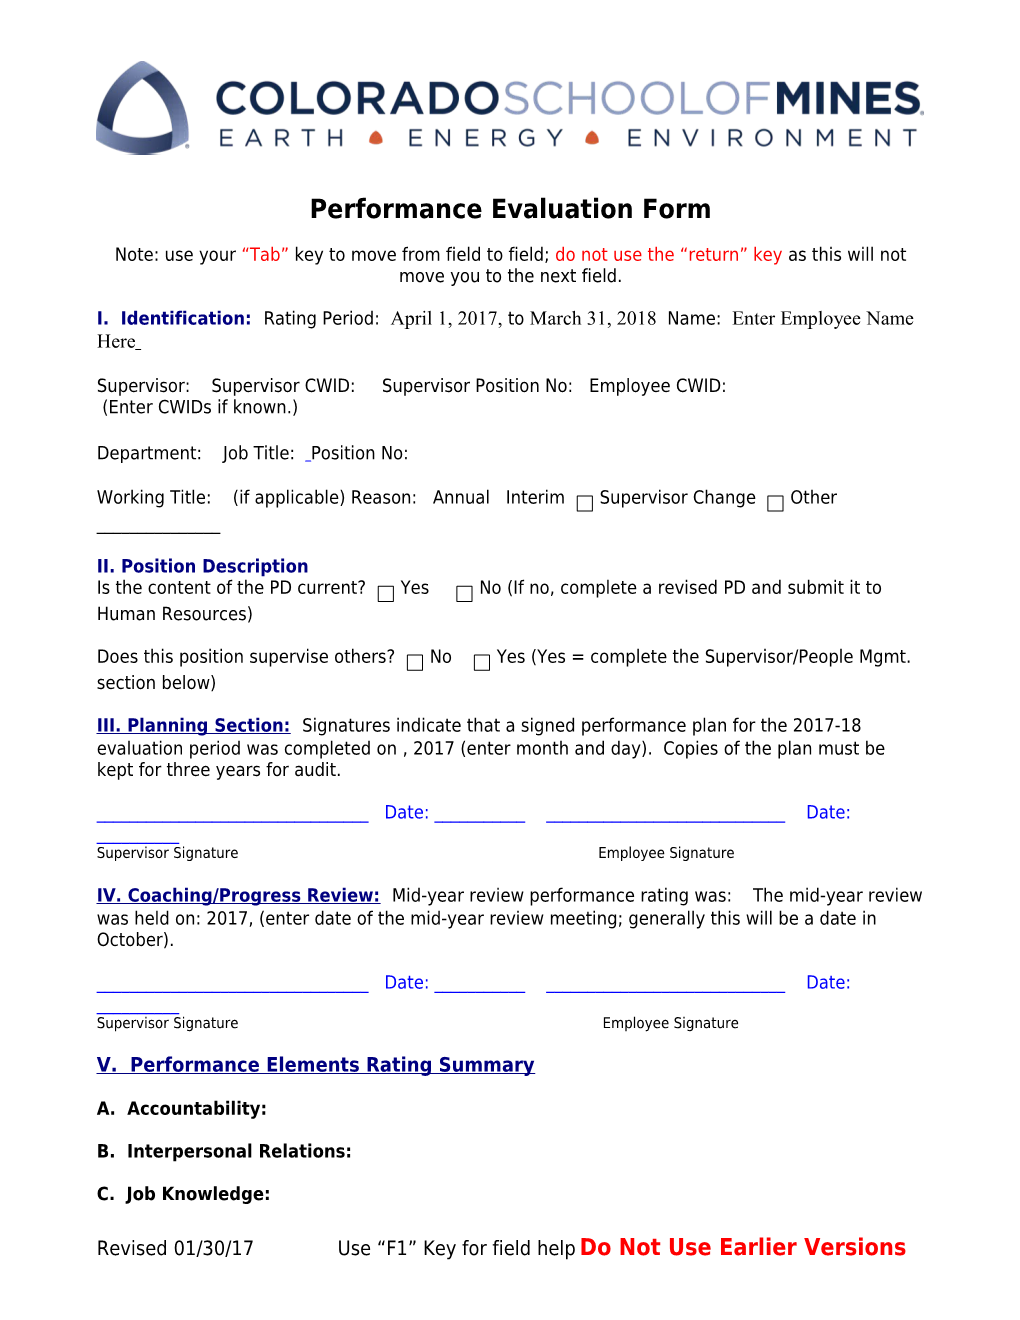 Performance Evaluation Form s1